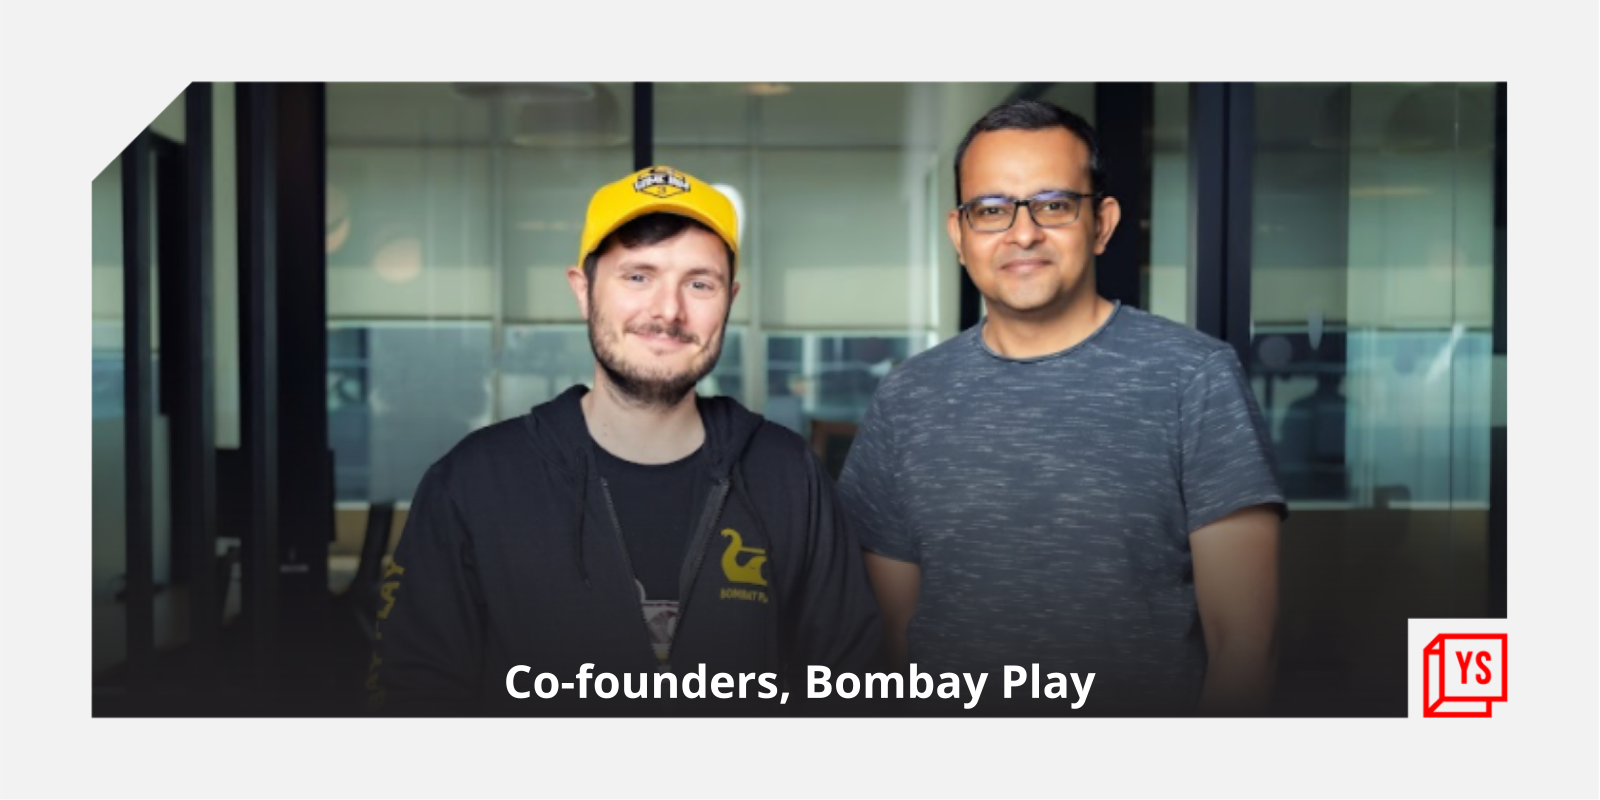 [Funding alert] Gaming startup Bombay Play raises $7M funding in Series A round led by Kalaari Capital